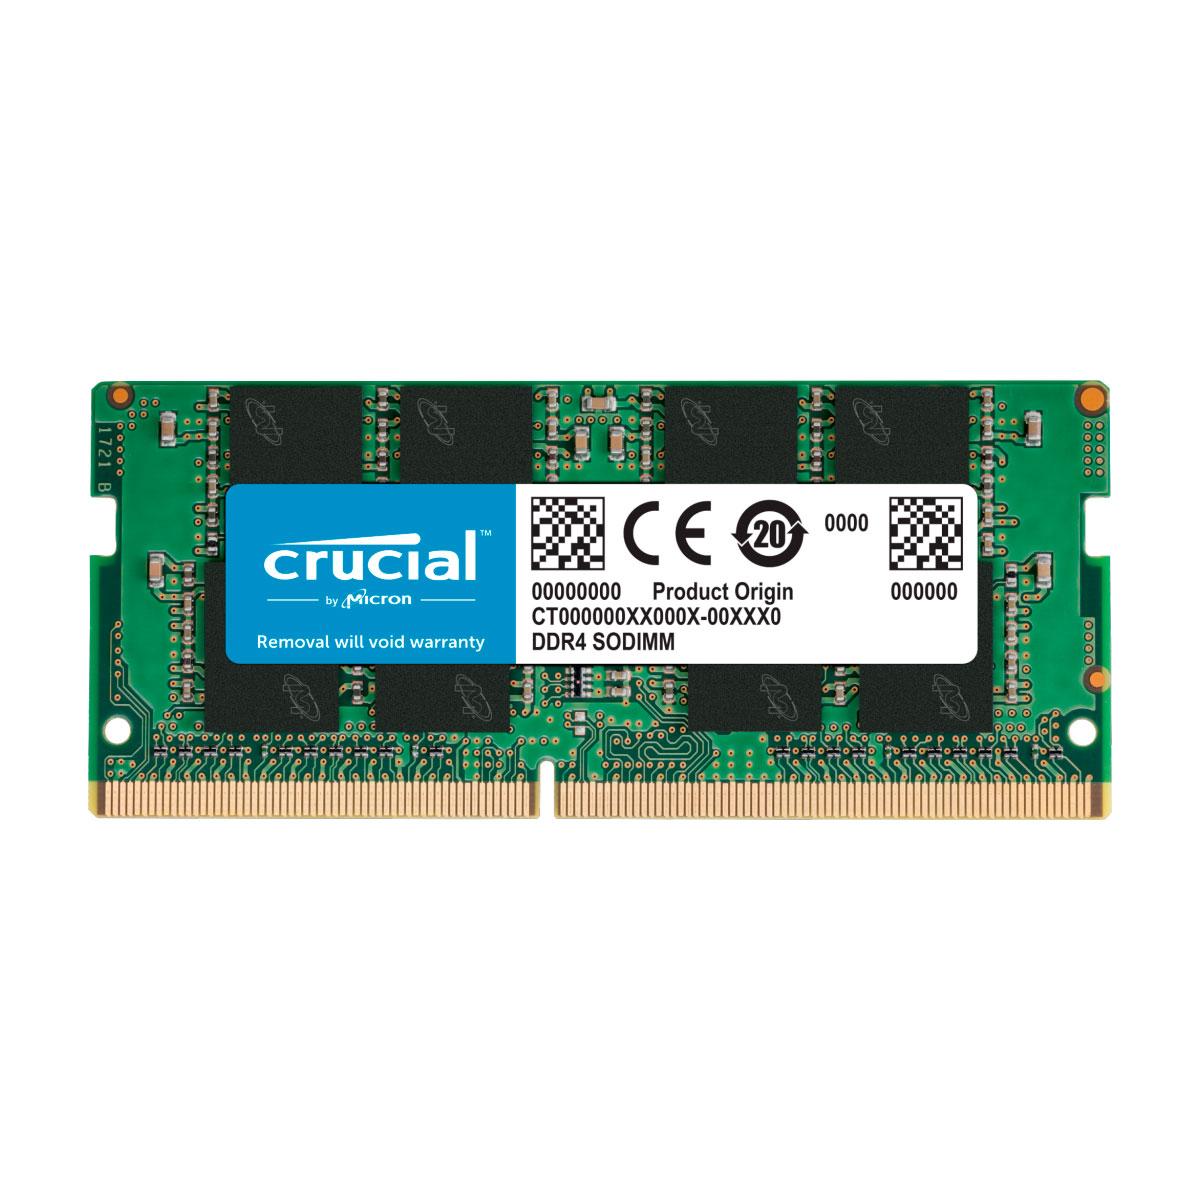 MEMORIA SODIMM DDR4 CRUCIAL (CT16G4SFD832A) 16GB 3200MHZ , CL22 - CRUCIAL